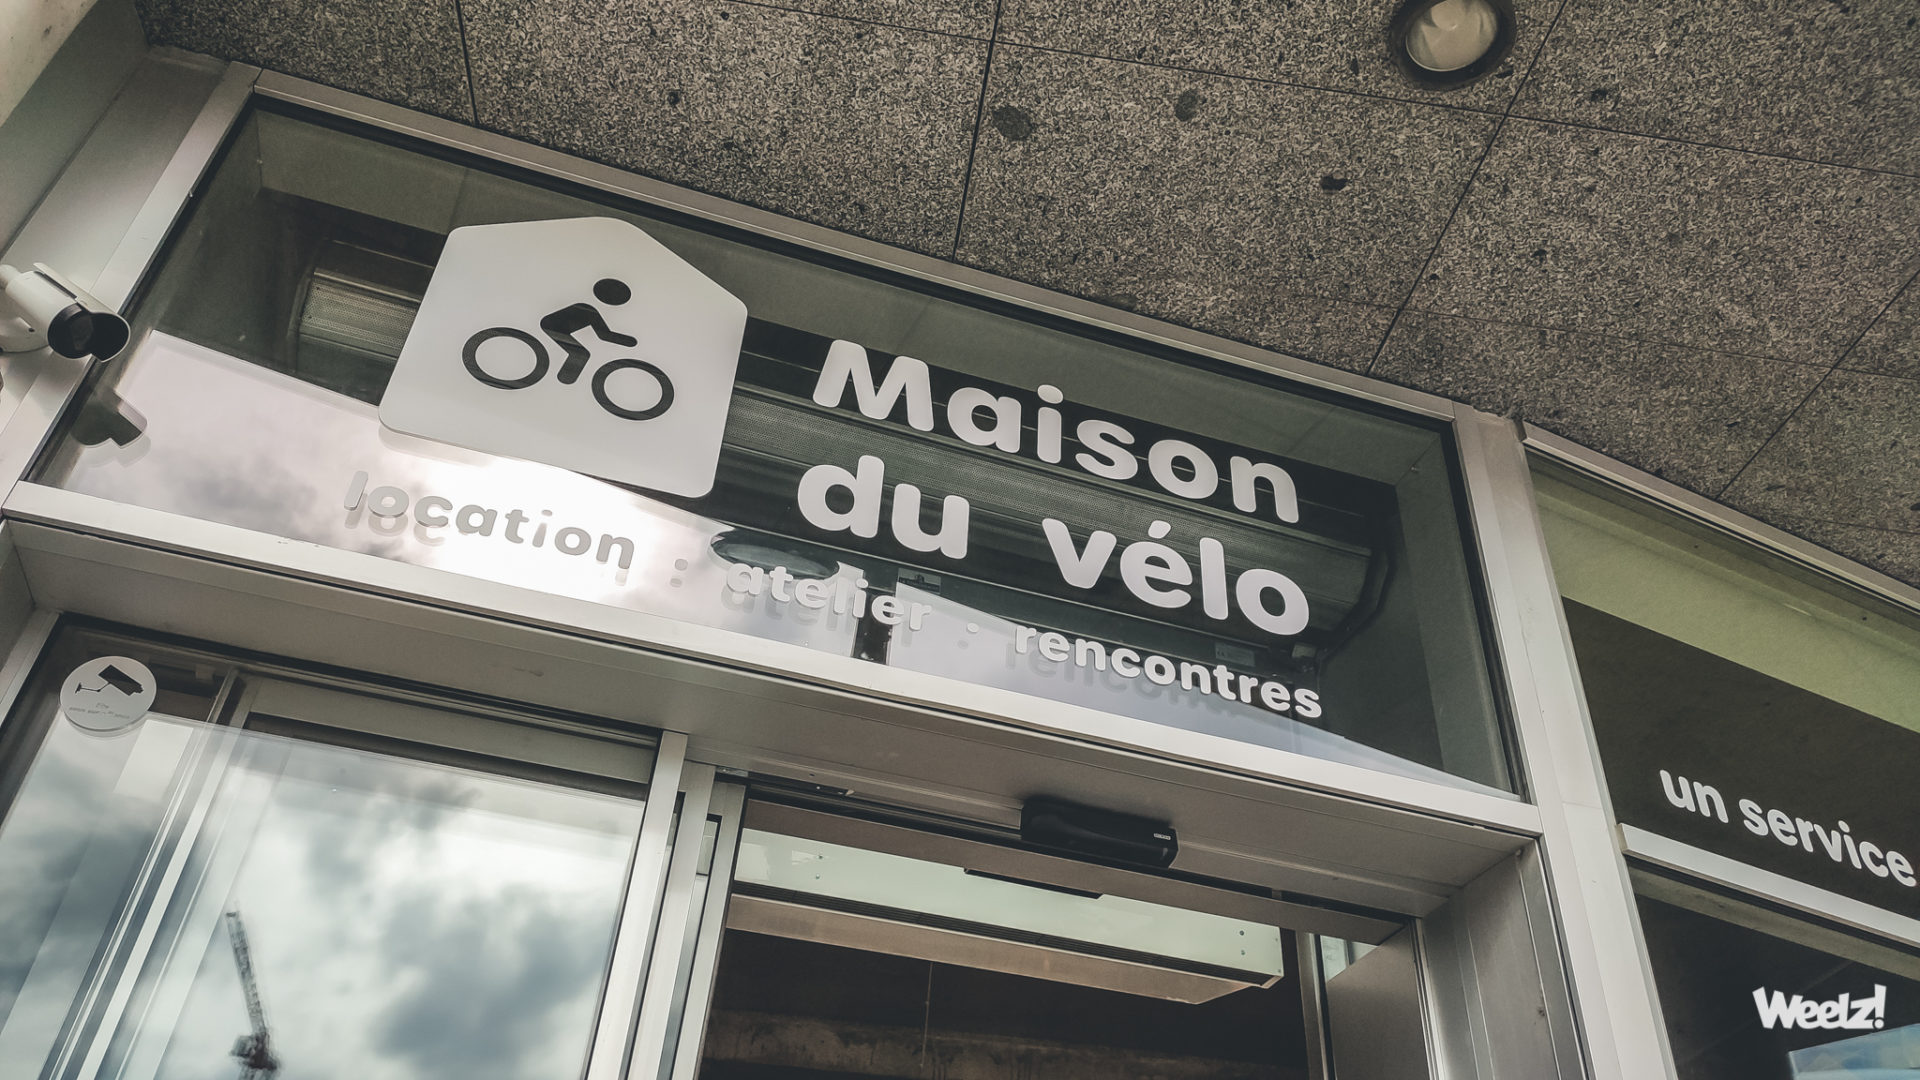 Weelz Visite Rennes Velo Cycliste 2021 174307